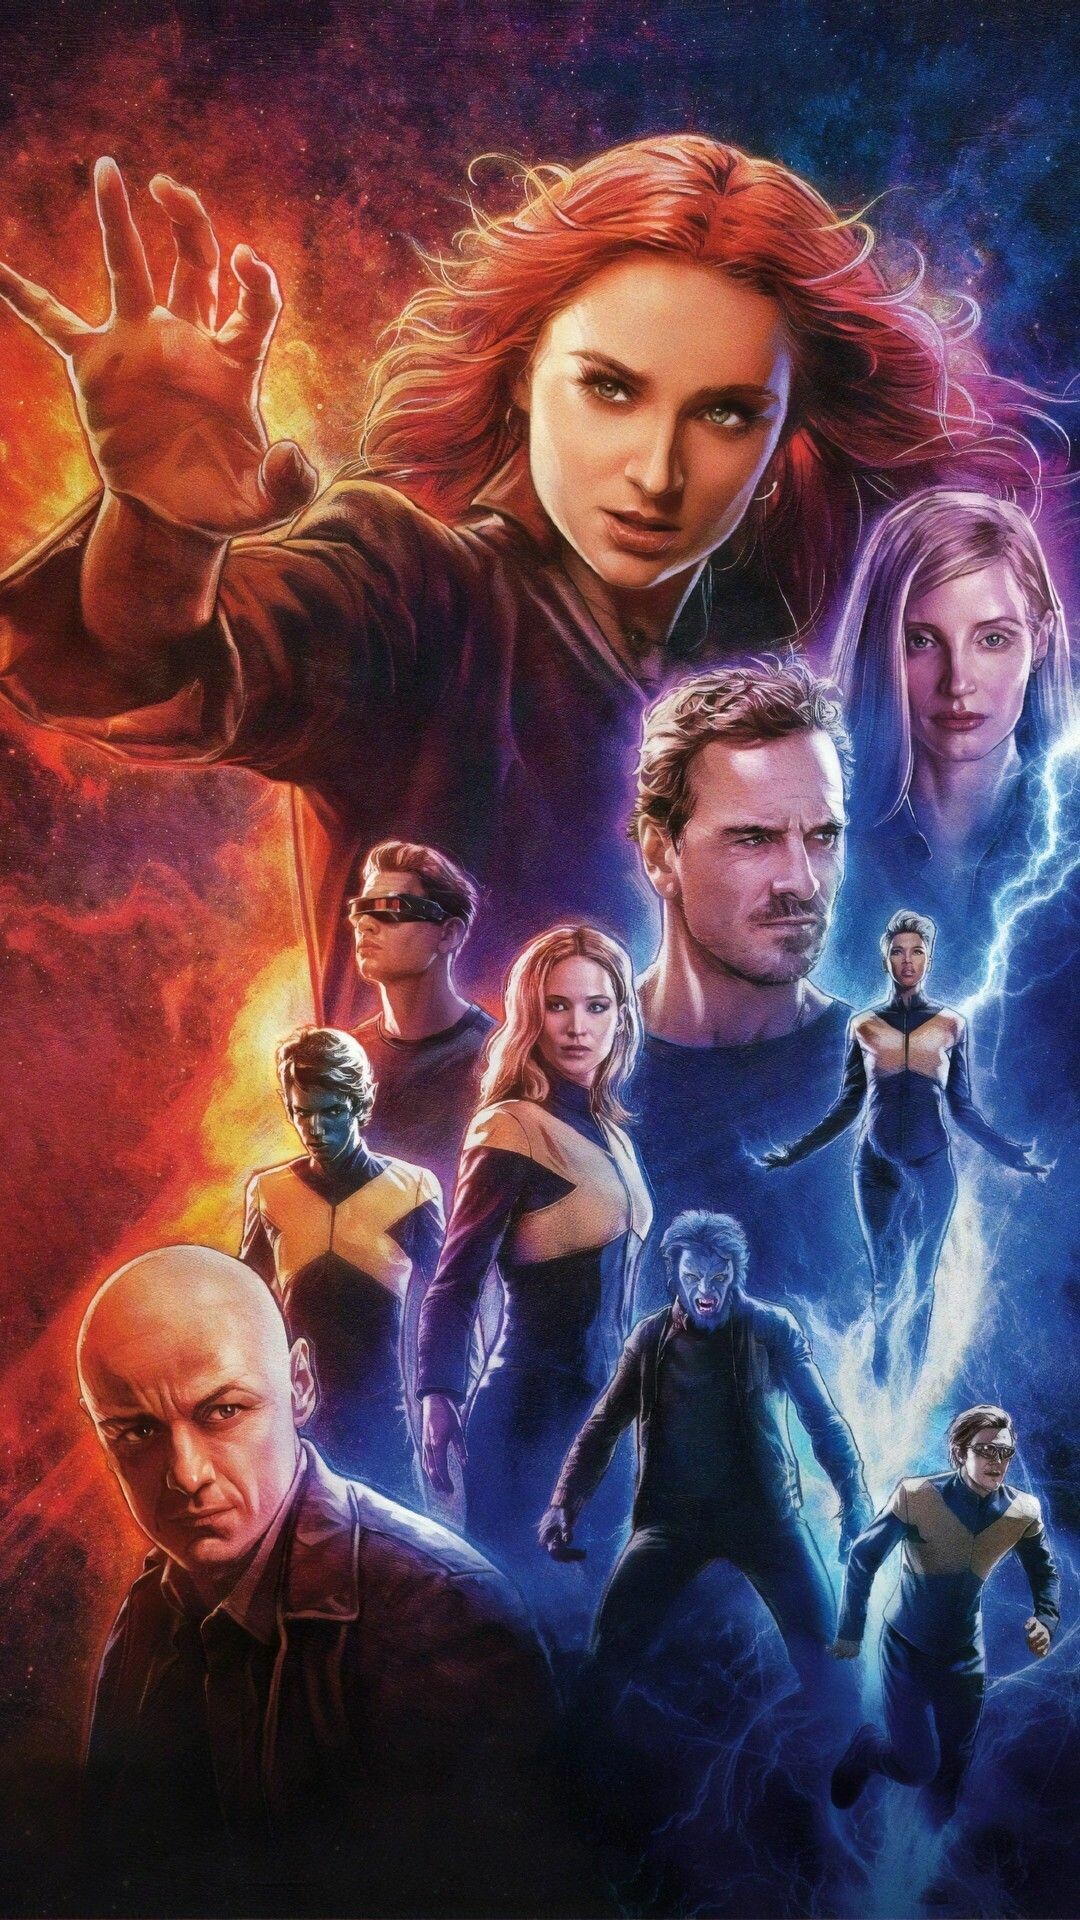 Phoenix (Marvel): The seventh installment in the X-Men film series, Jean Grey portrayed by Sophie Turner. 1080x1920 Full HD Wallpaper.